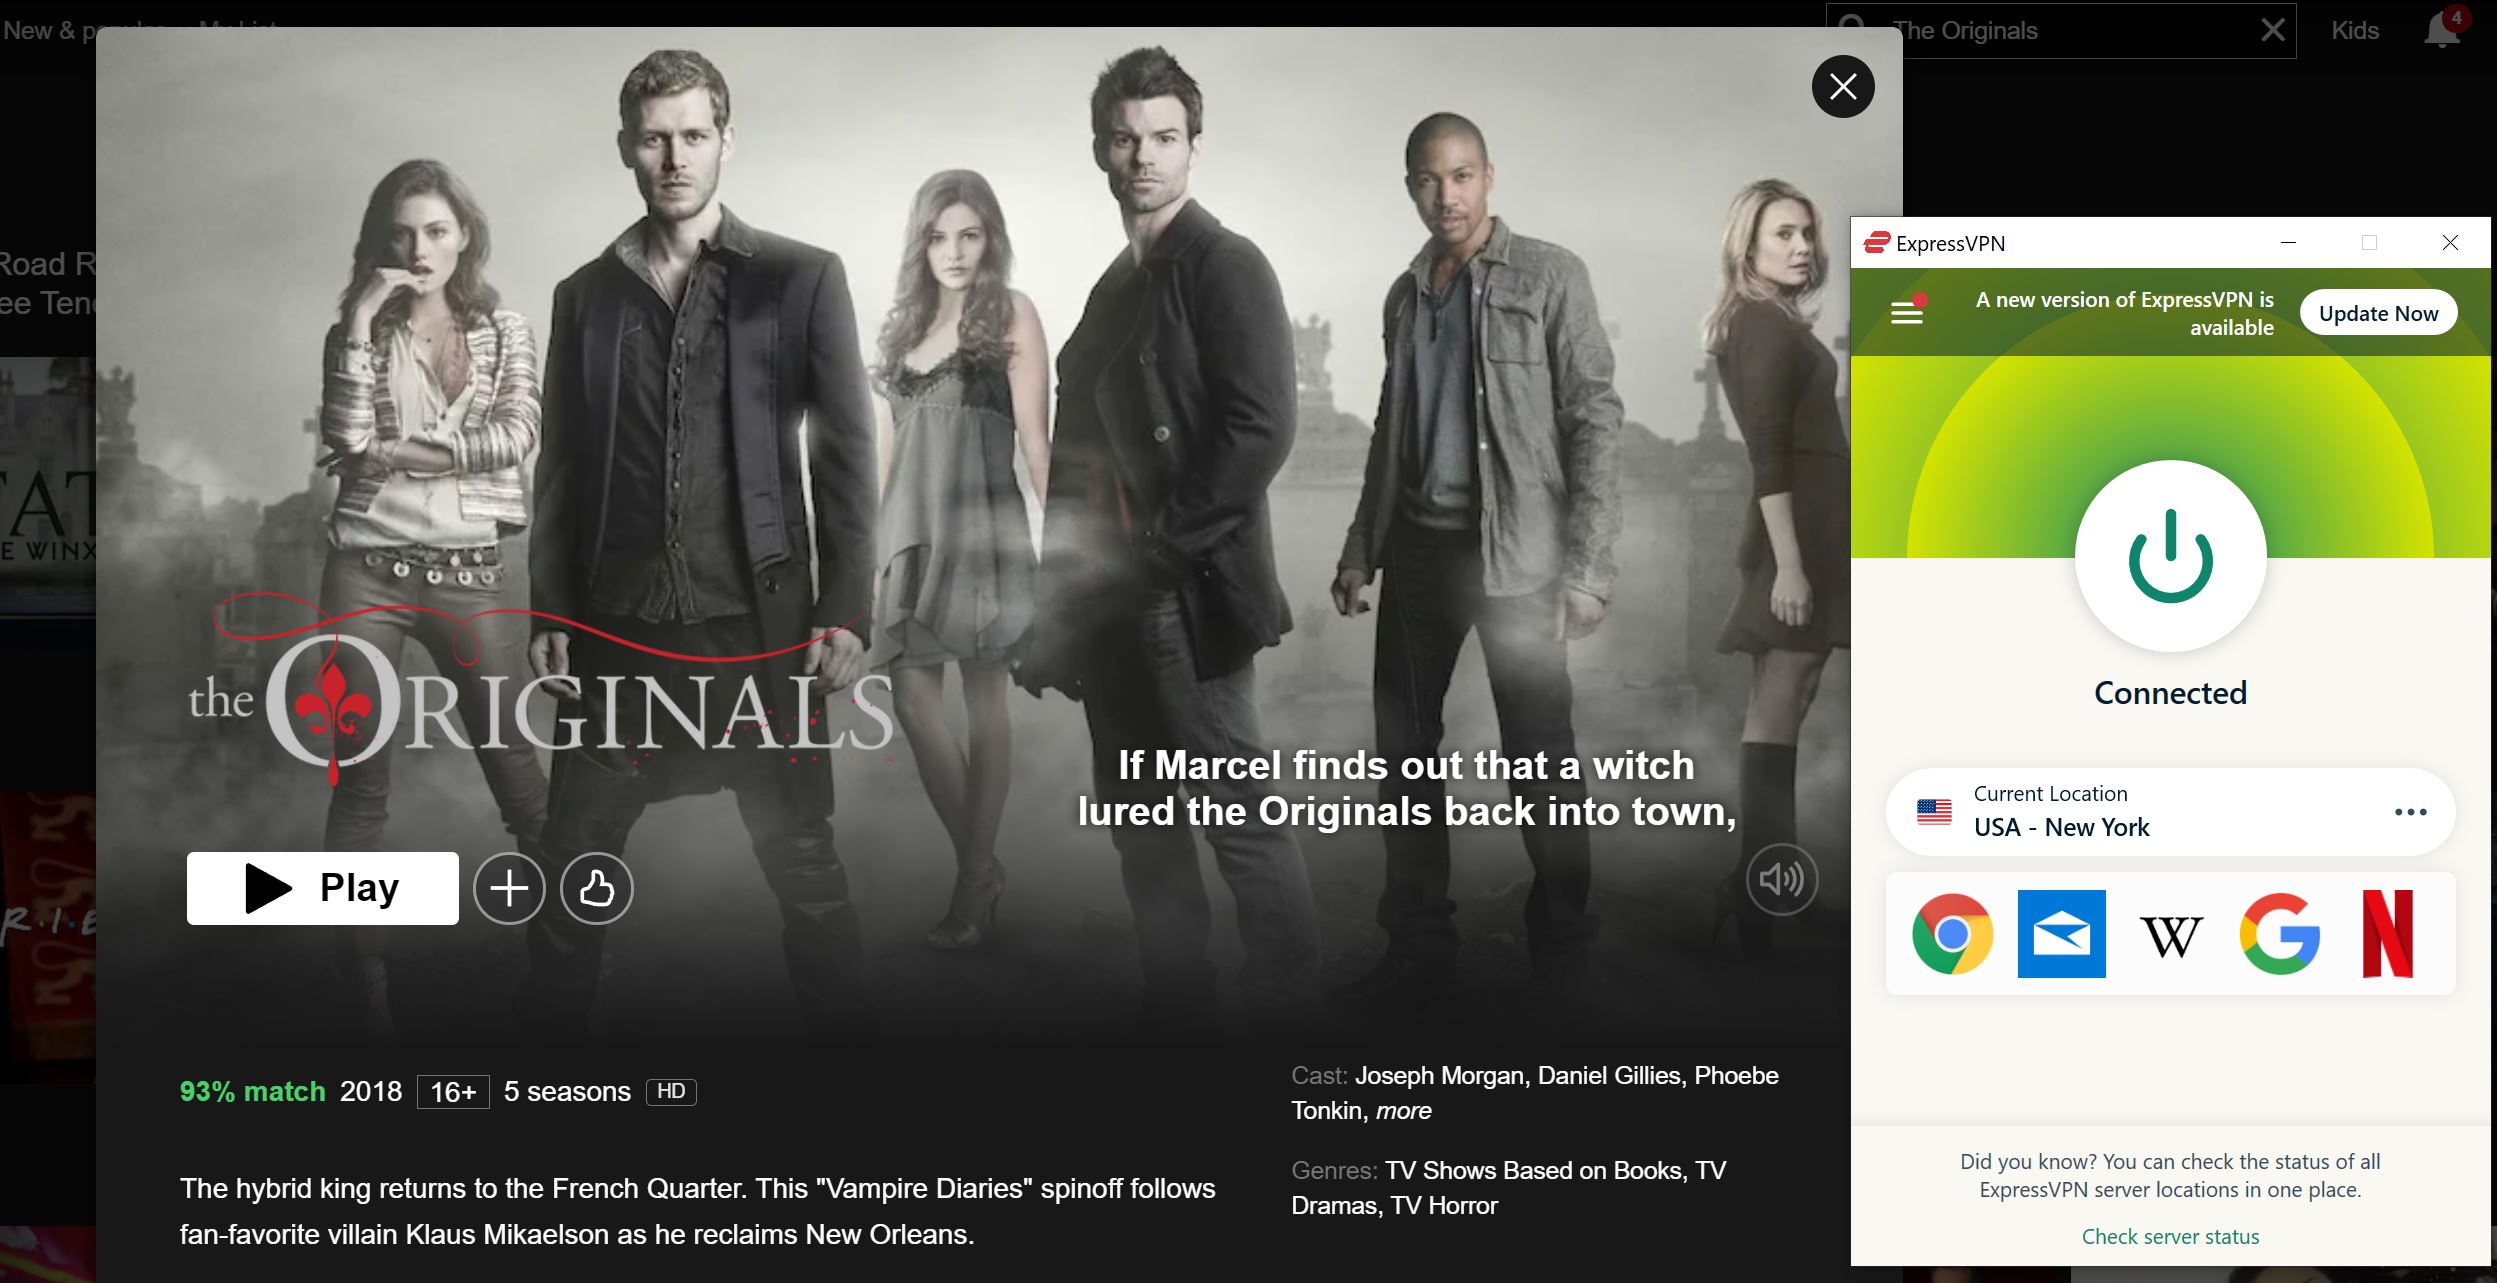 The Originals on Netflix